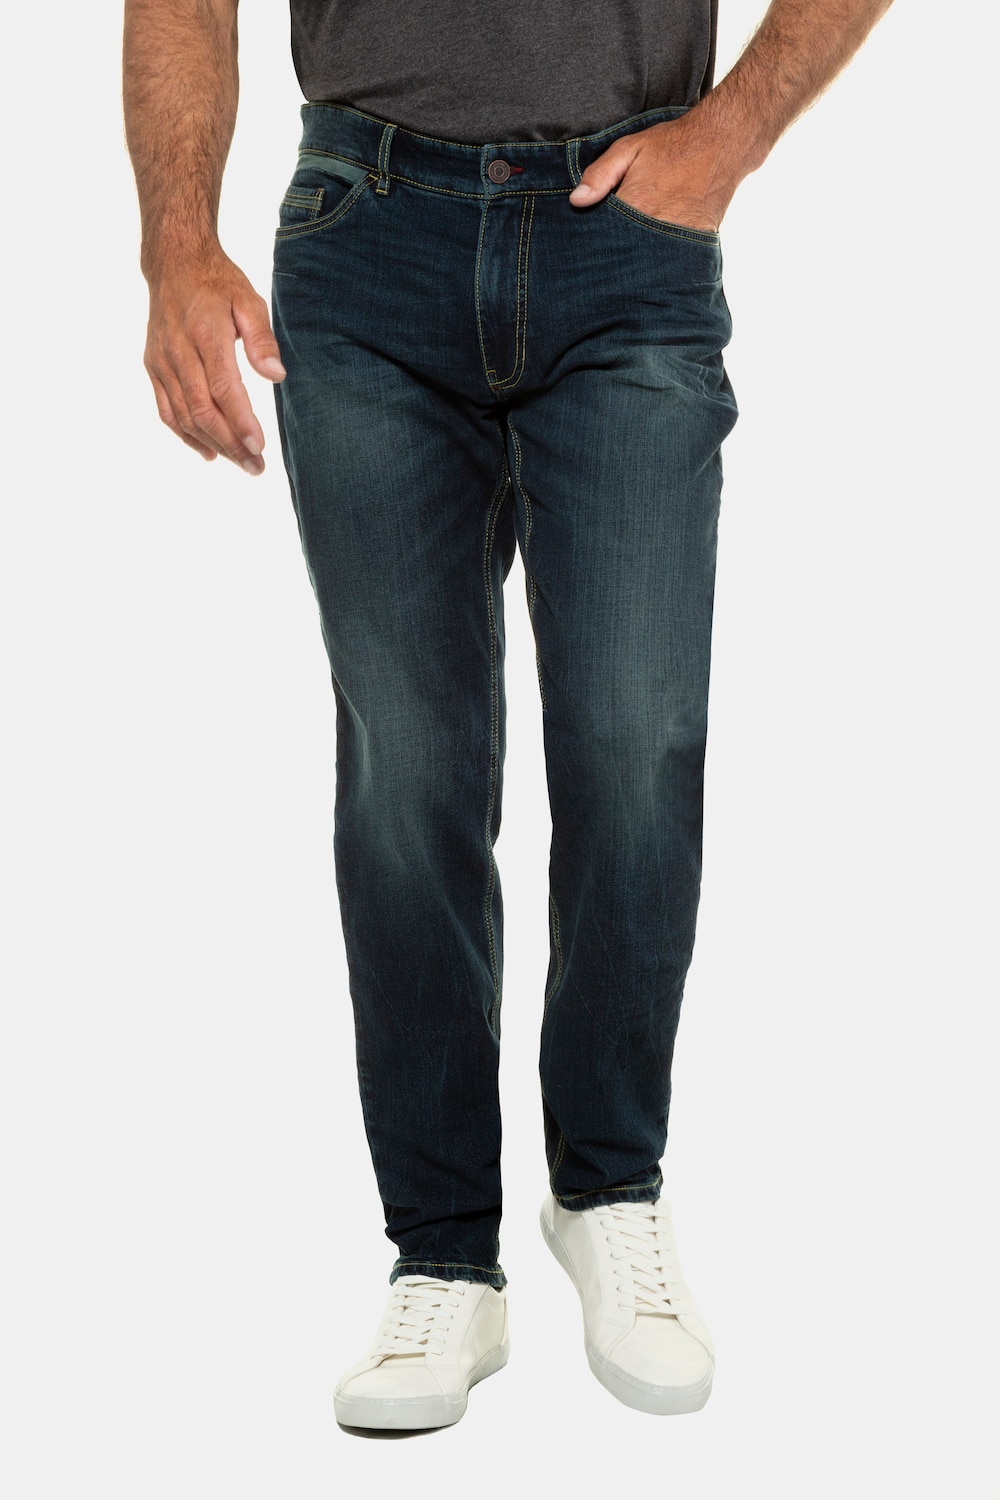 Grote Maten buik-fit jeans, Heren, blauw, Maat: 62, Katoen, JP1880